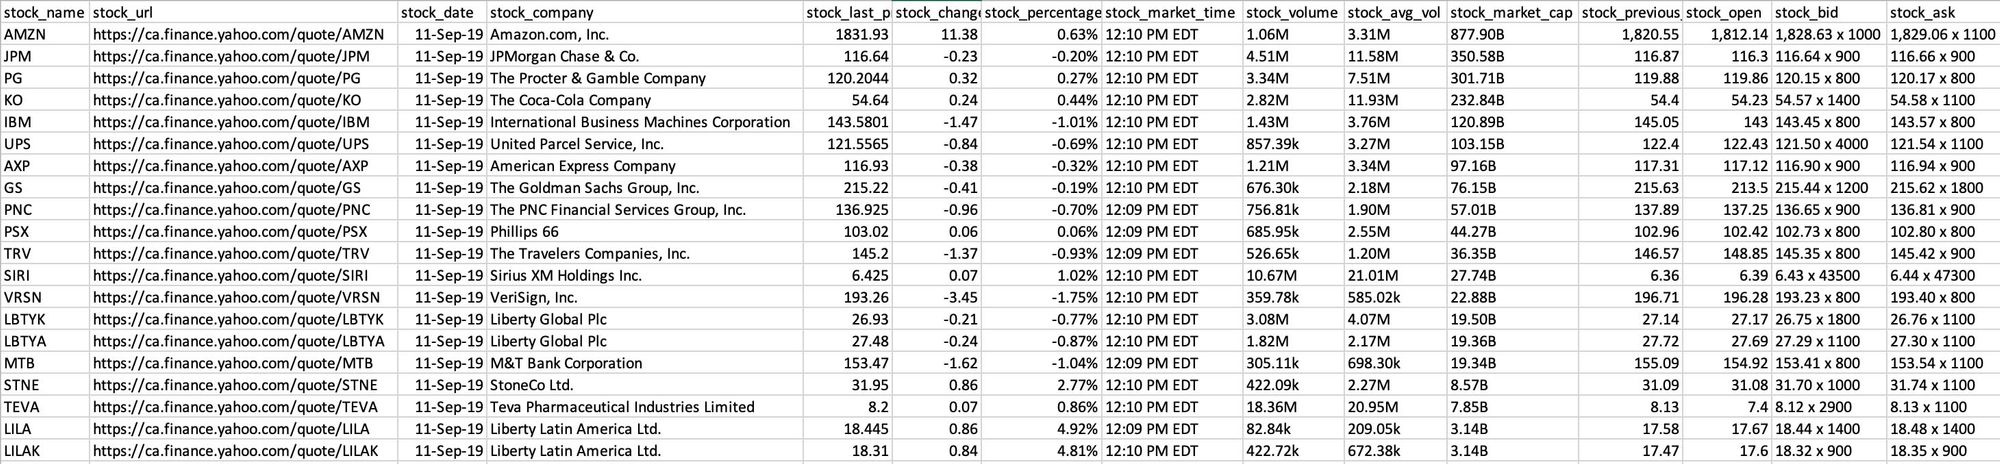 yahoo finance stock data on an excel sheet